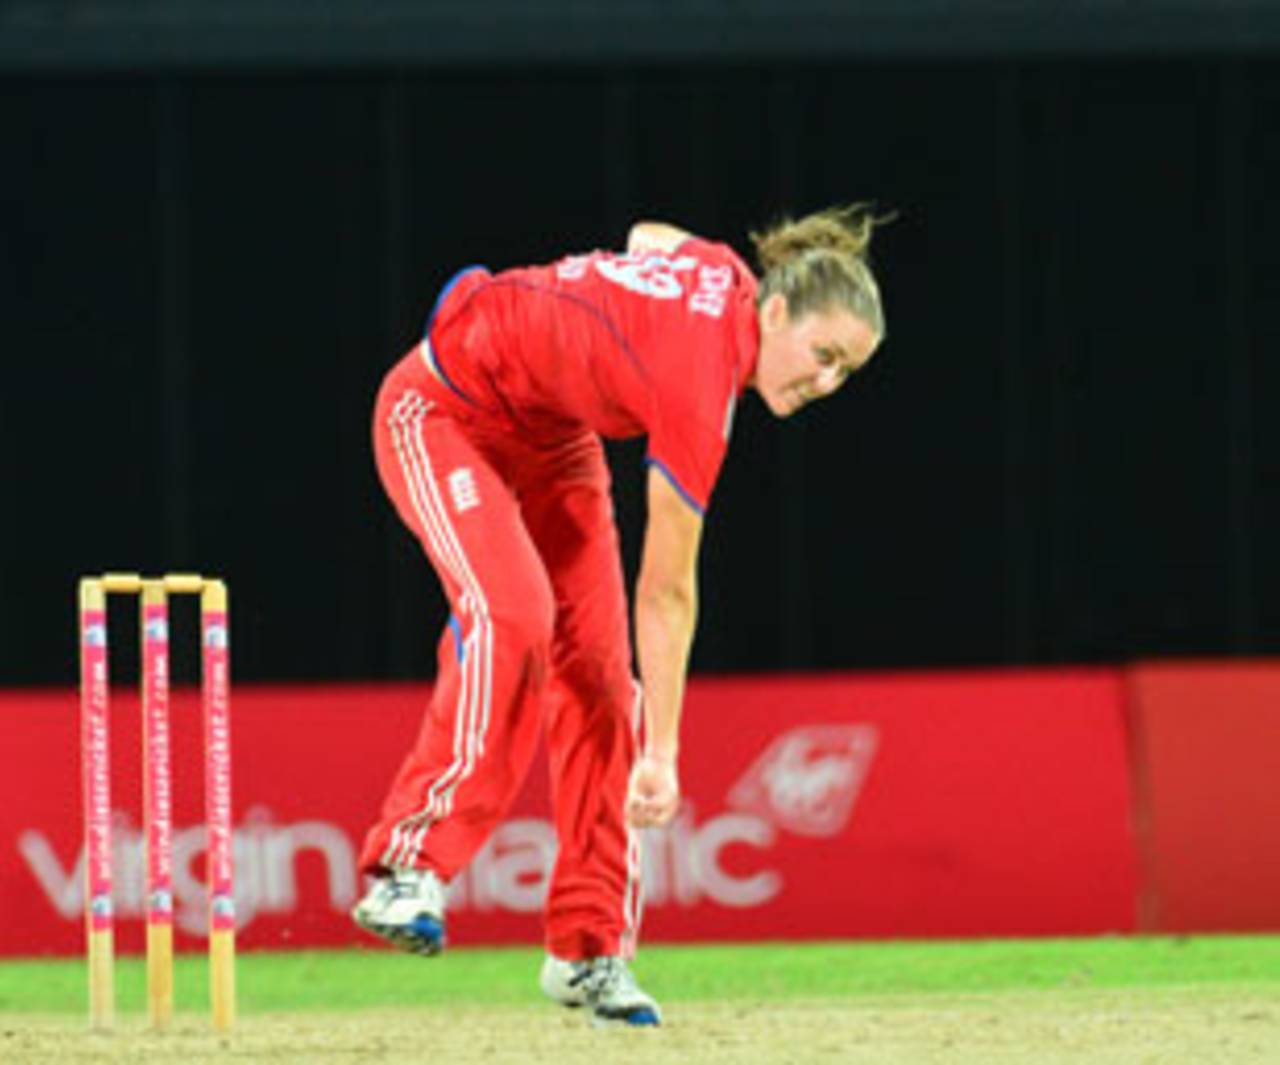 Natalie Sciver took a hat-trick against New Zealand Women, England Women v New Zealand Women, West Indies Tri-Nation Series, Barbados, October 22, 2013